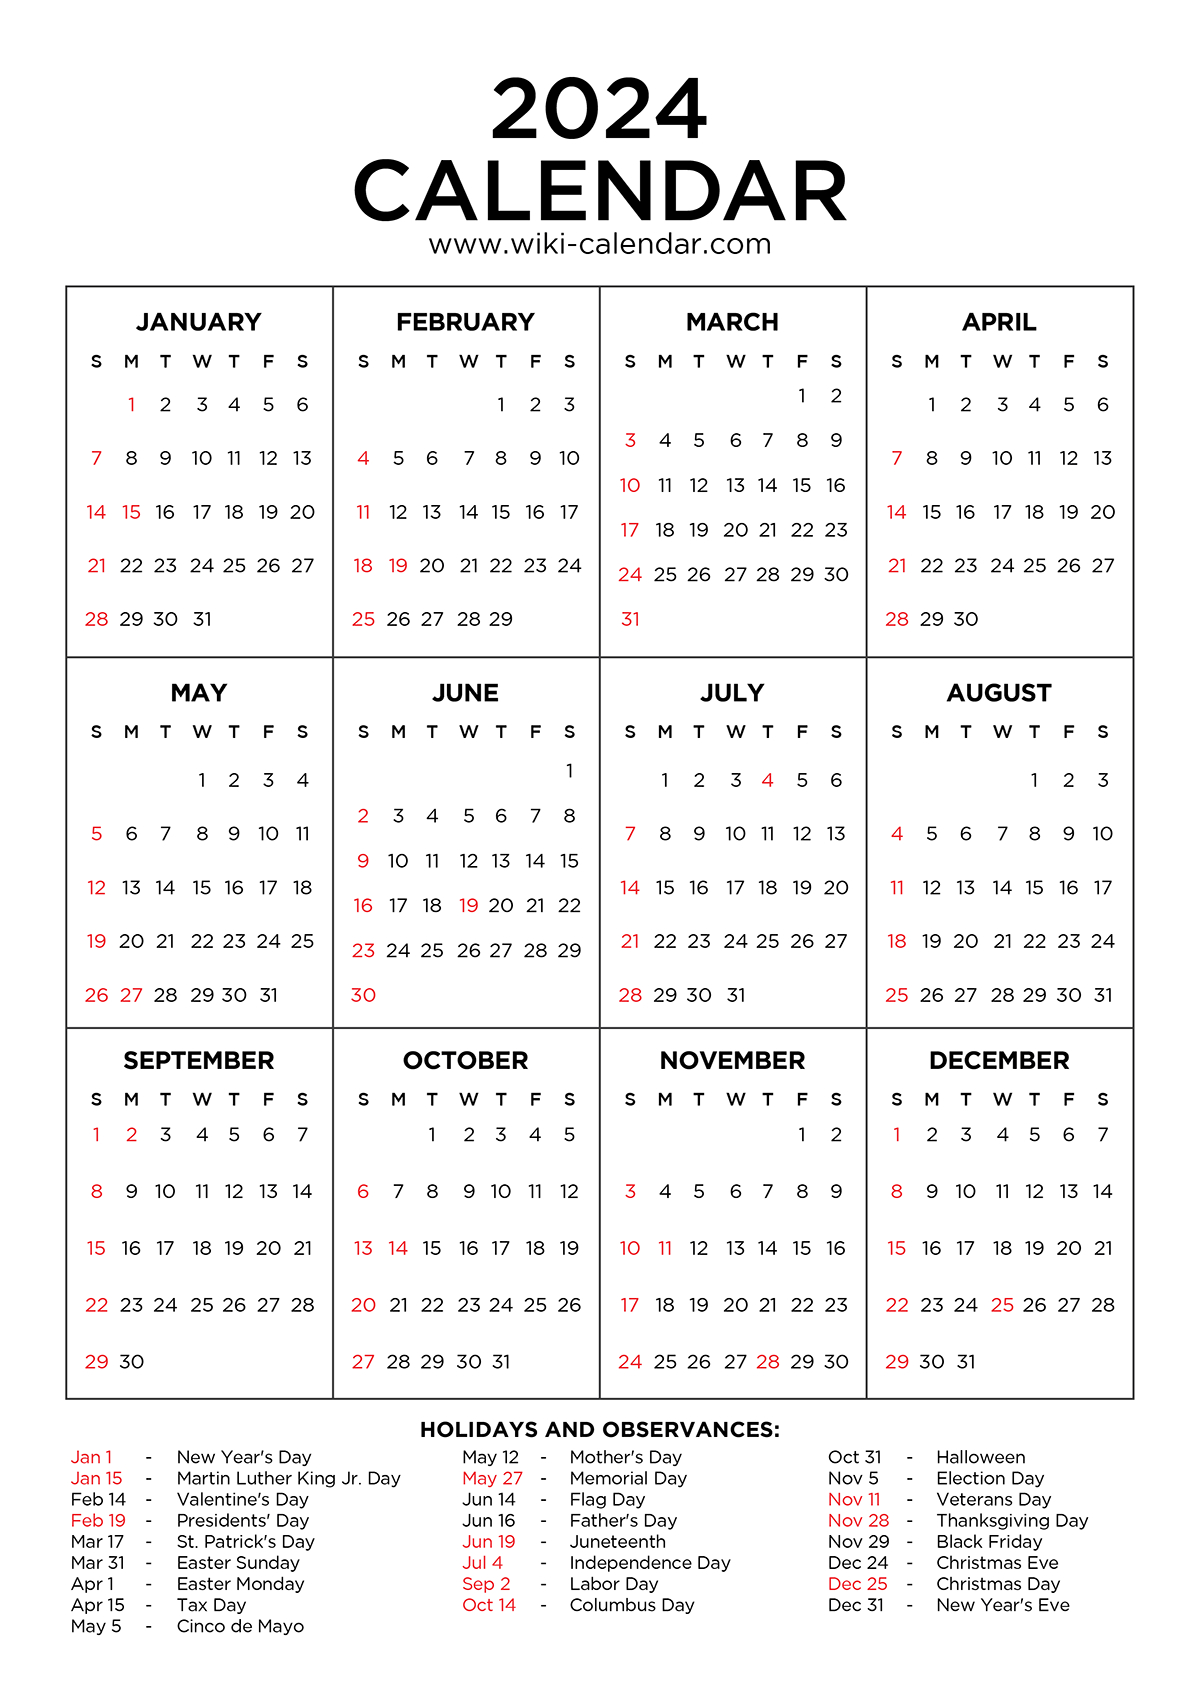 Year 2024 Calendar Printable With Holidays - Wiki Calendar | Wiki Printable Calendar 2024